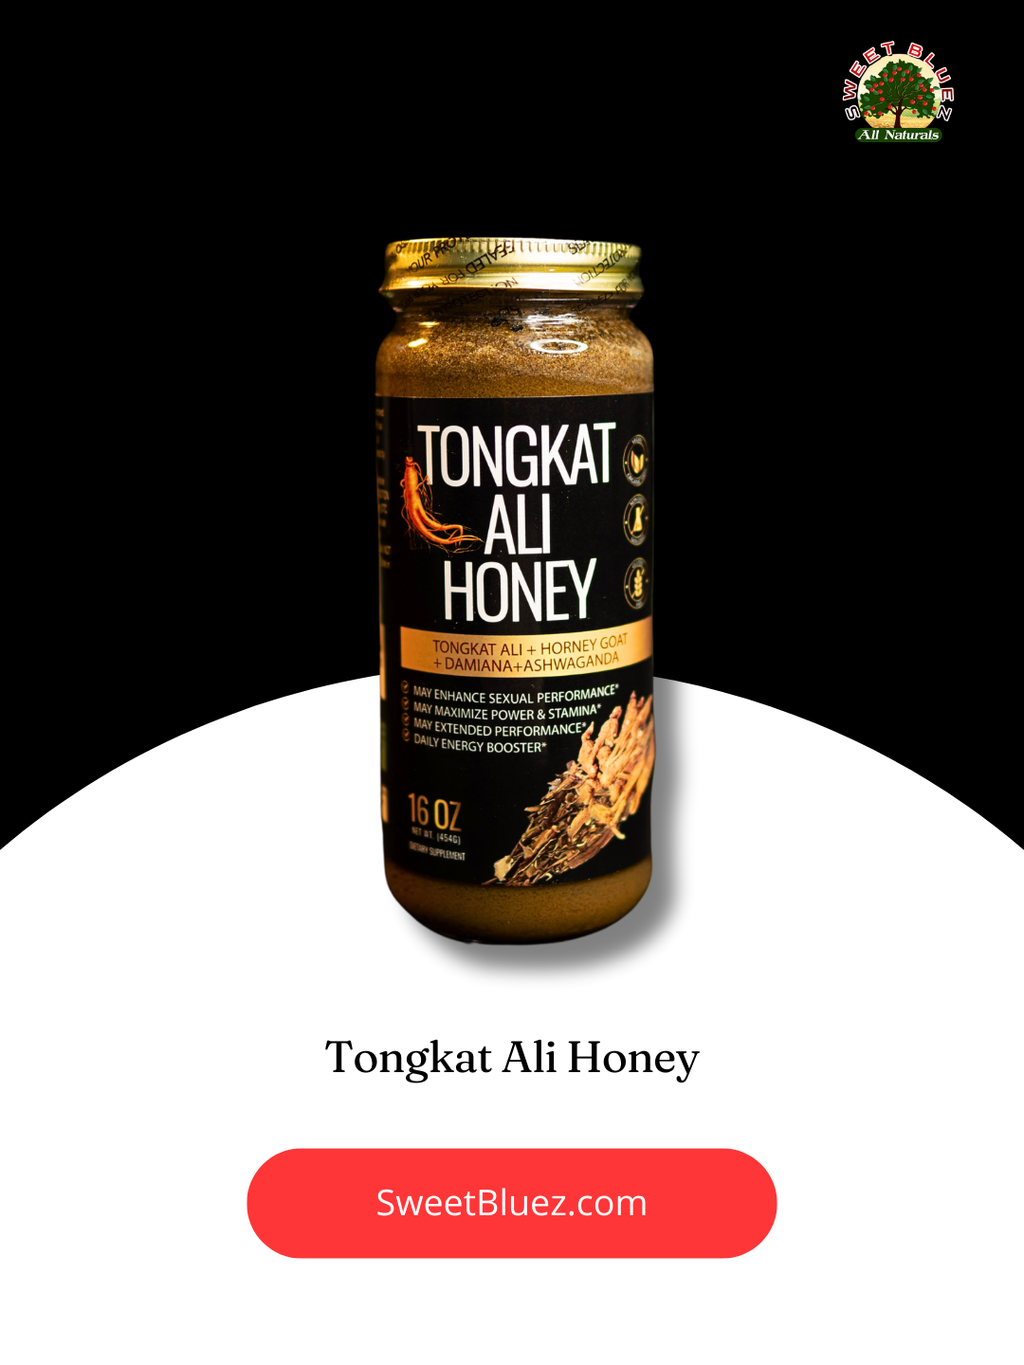 Tongkat Ali Honey, tonghat ali, natural sexual enhancer, benefits of tongkat Ali, increase sexual performance, increase stamina, increase muscle mass, natural energy booster, herbs for muscle mass